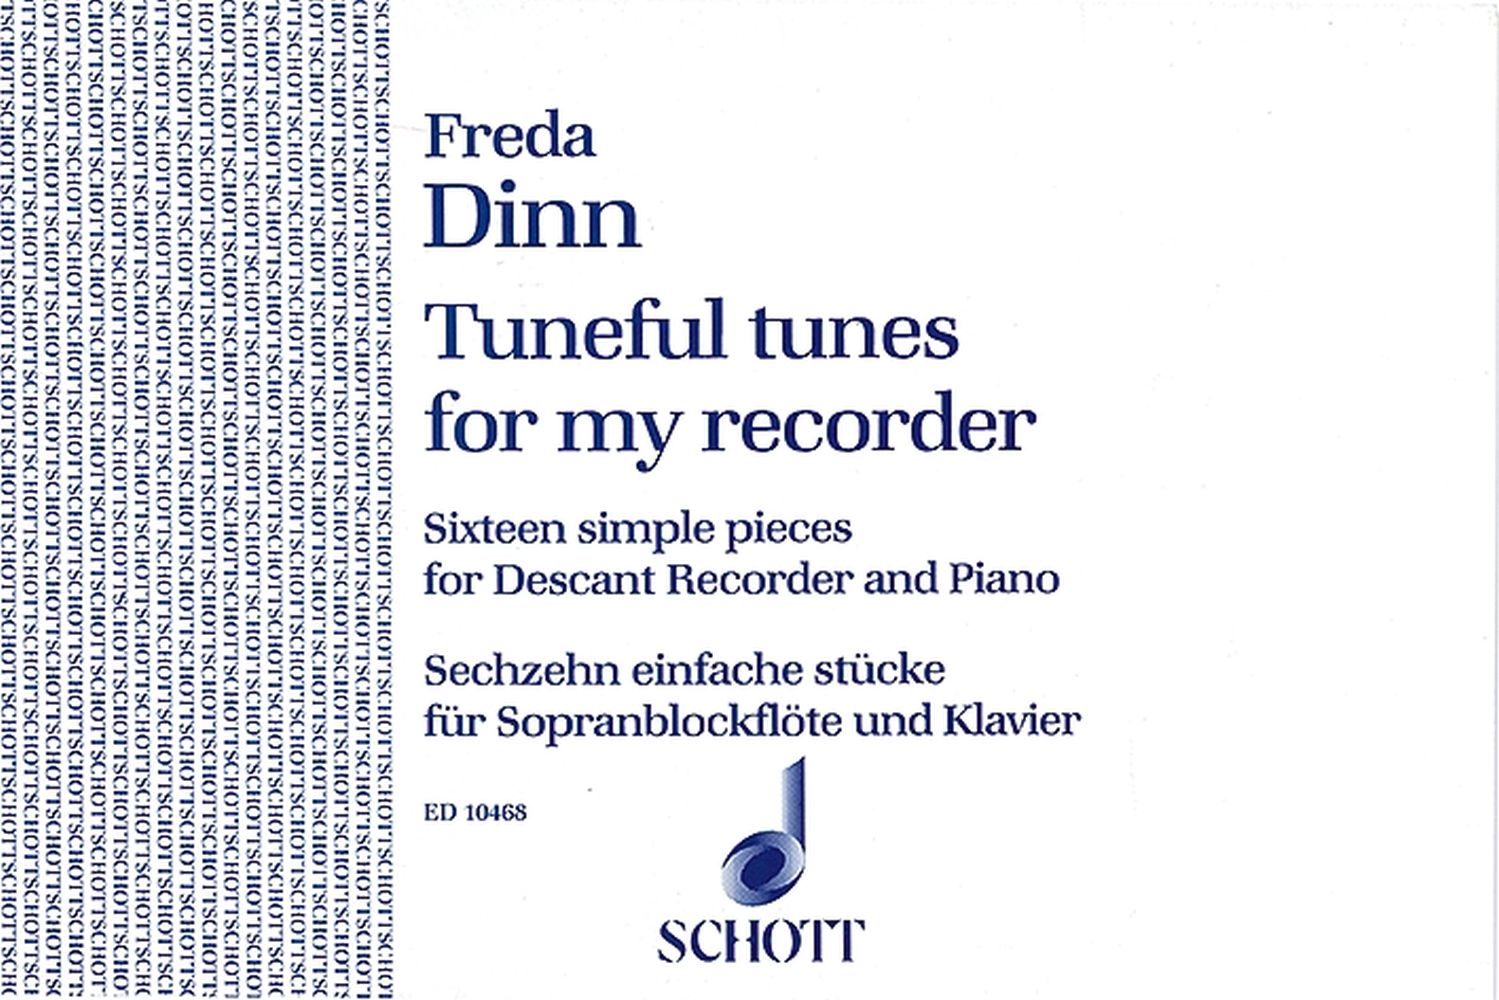 Freda Dinn: Tuneful Tunes For My Recorder: Descant Recorder